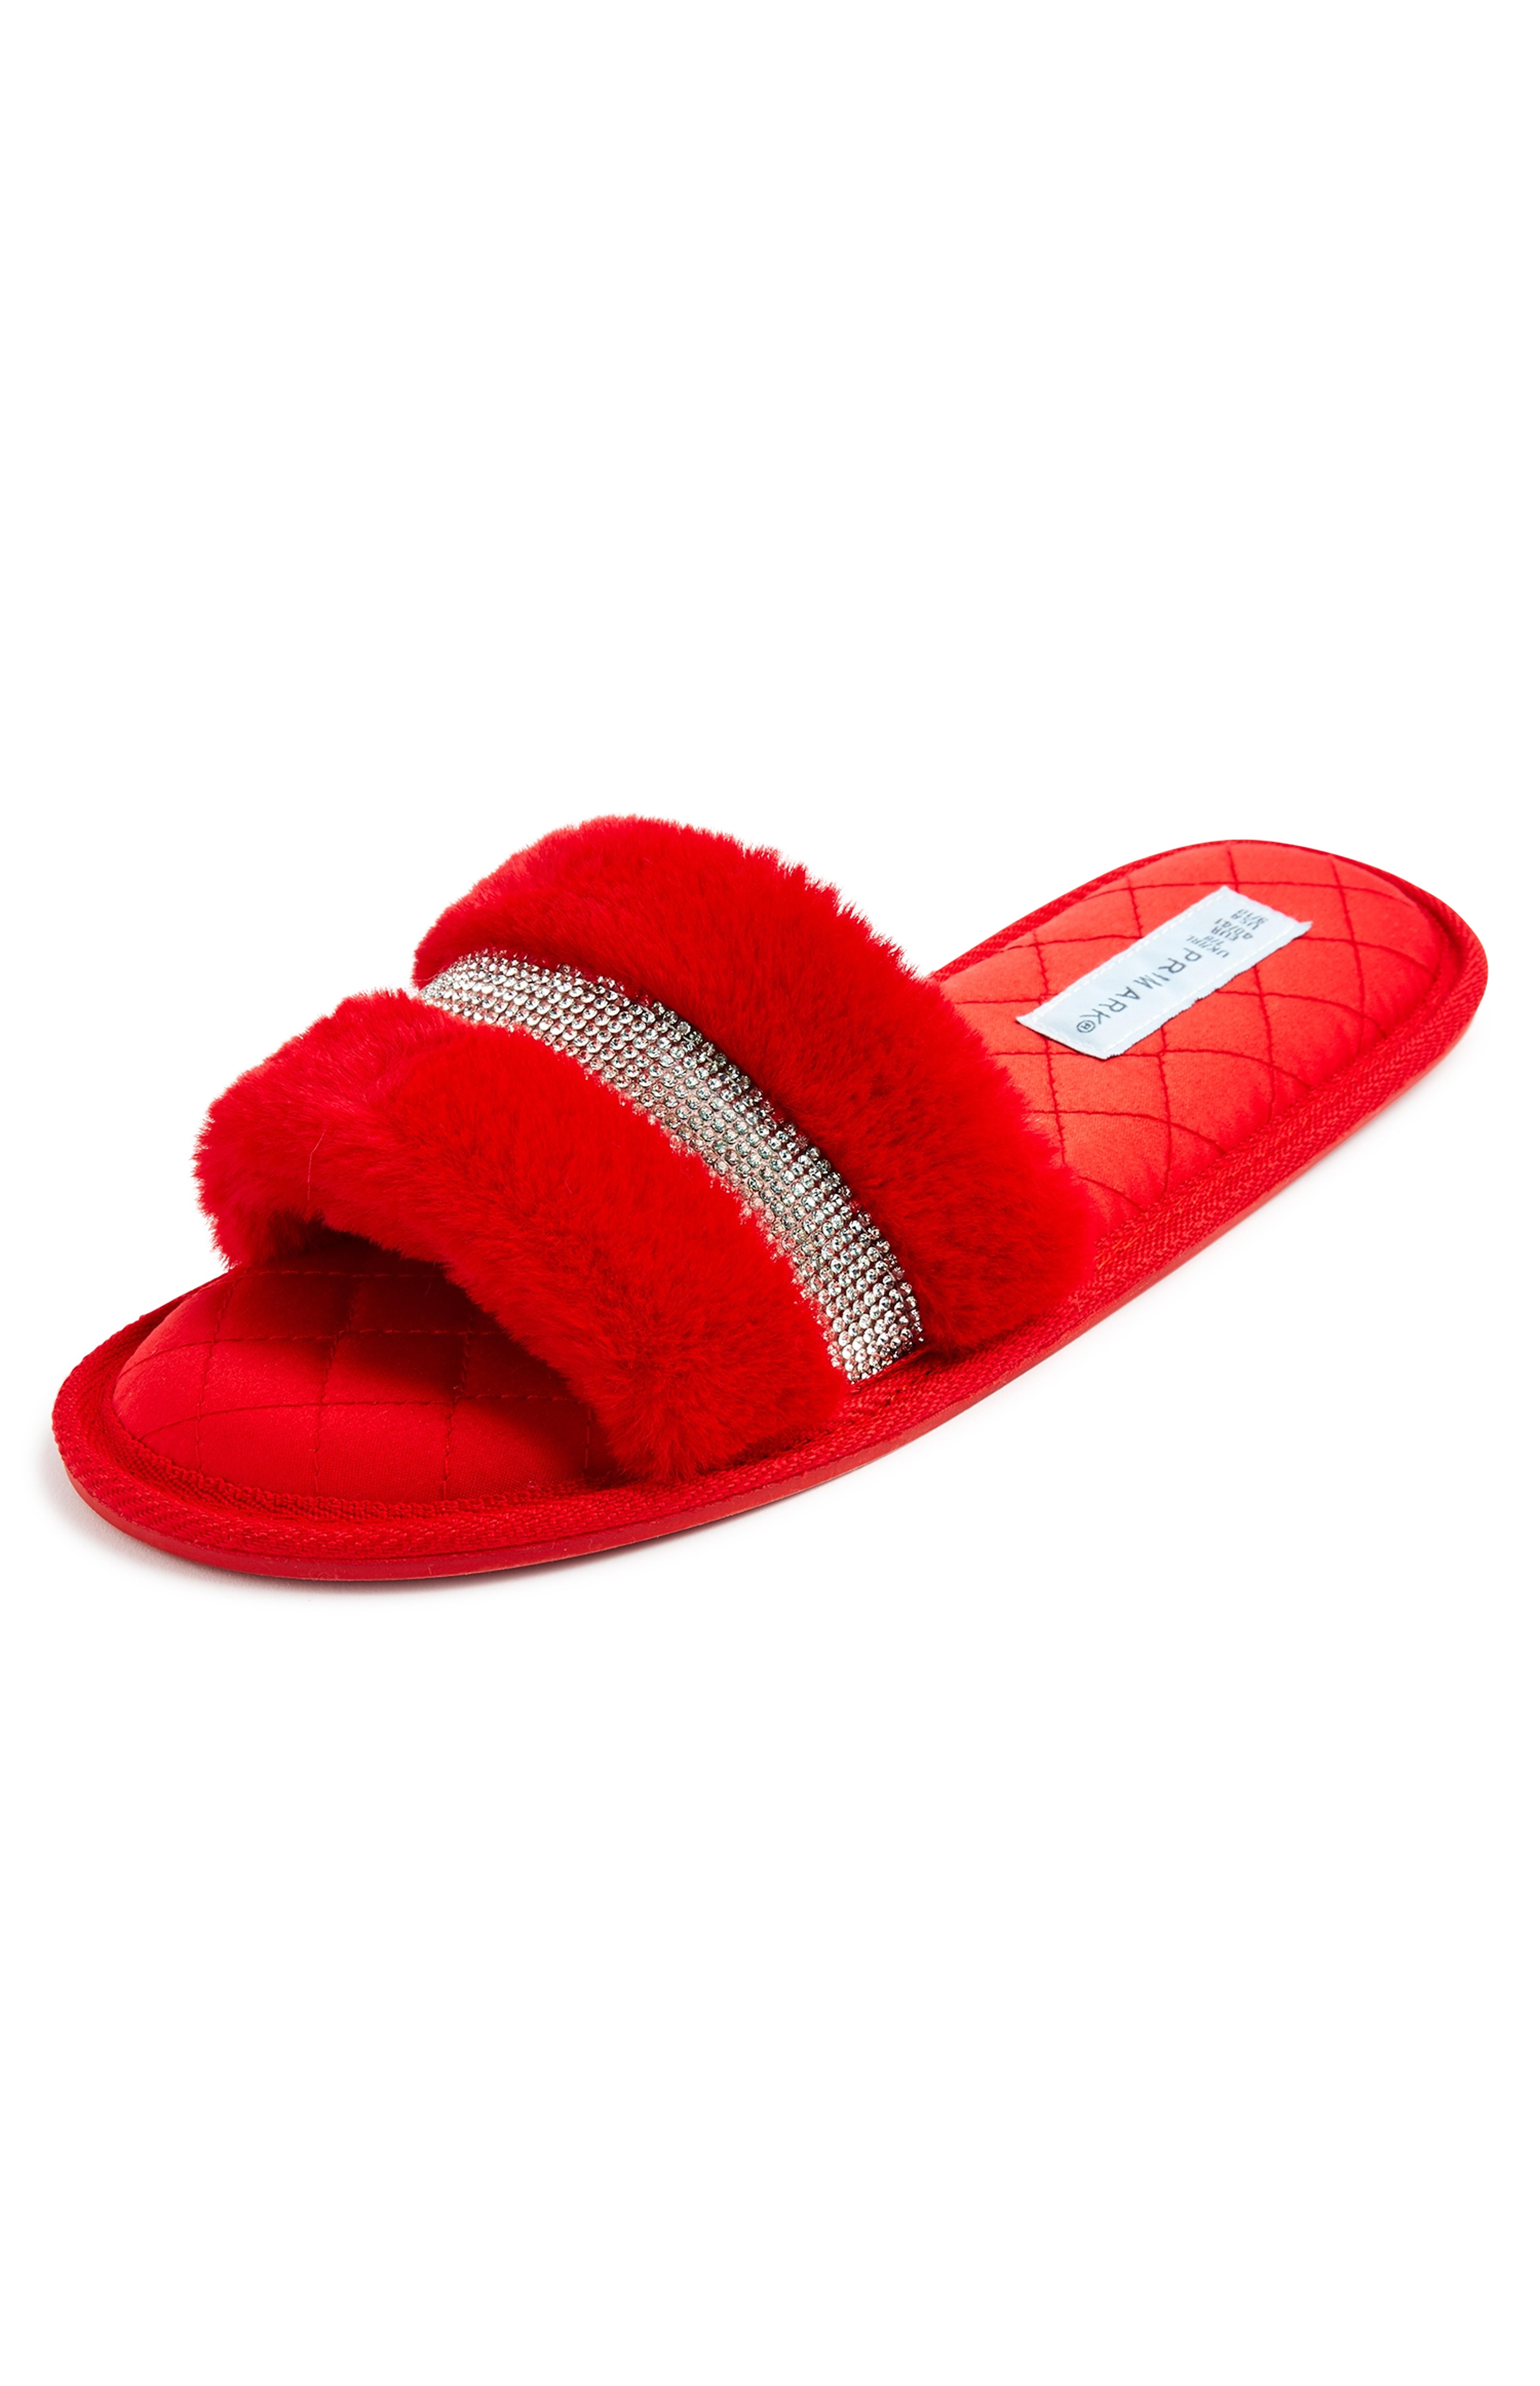 primark ladies slippers